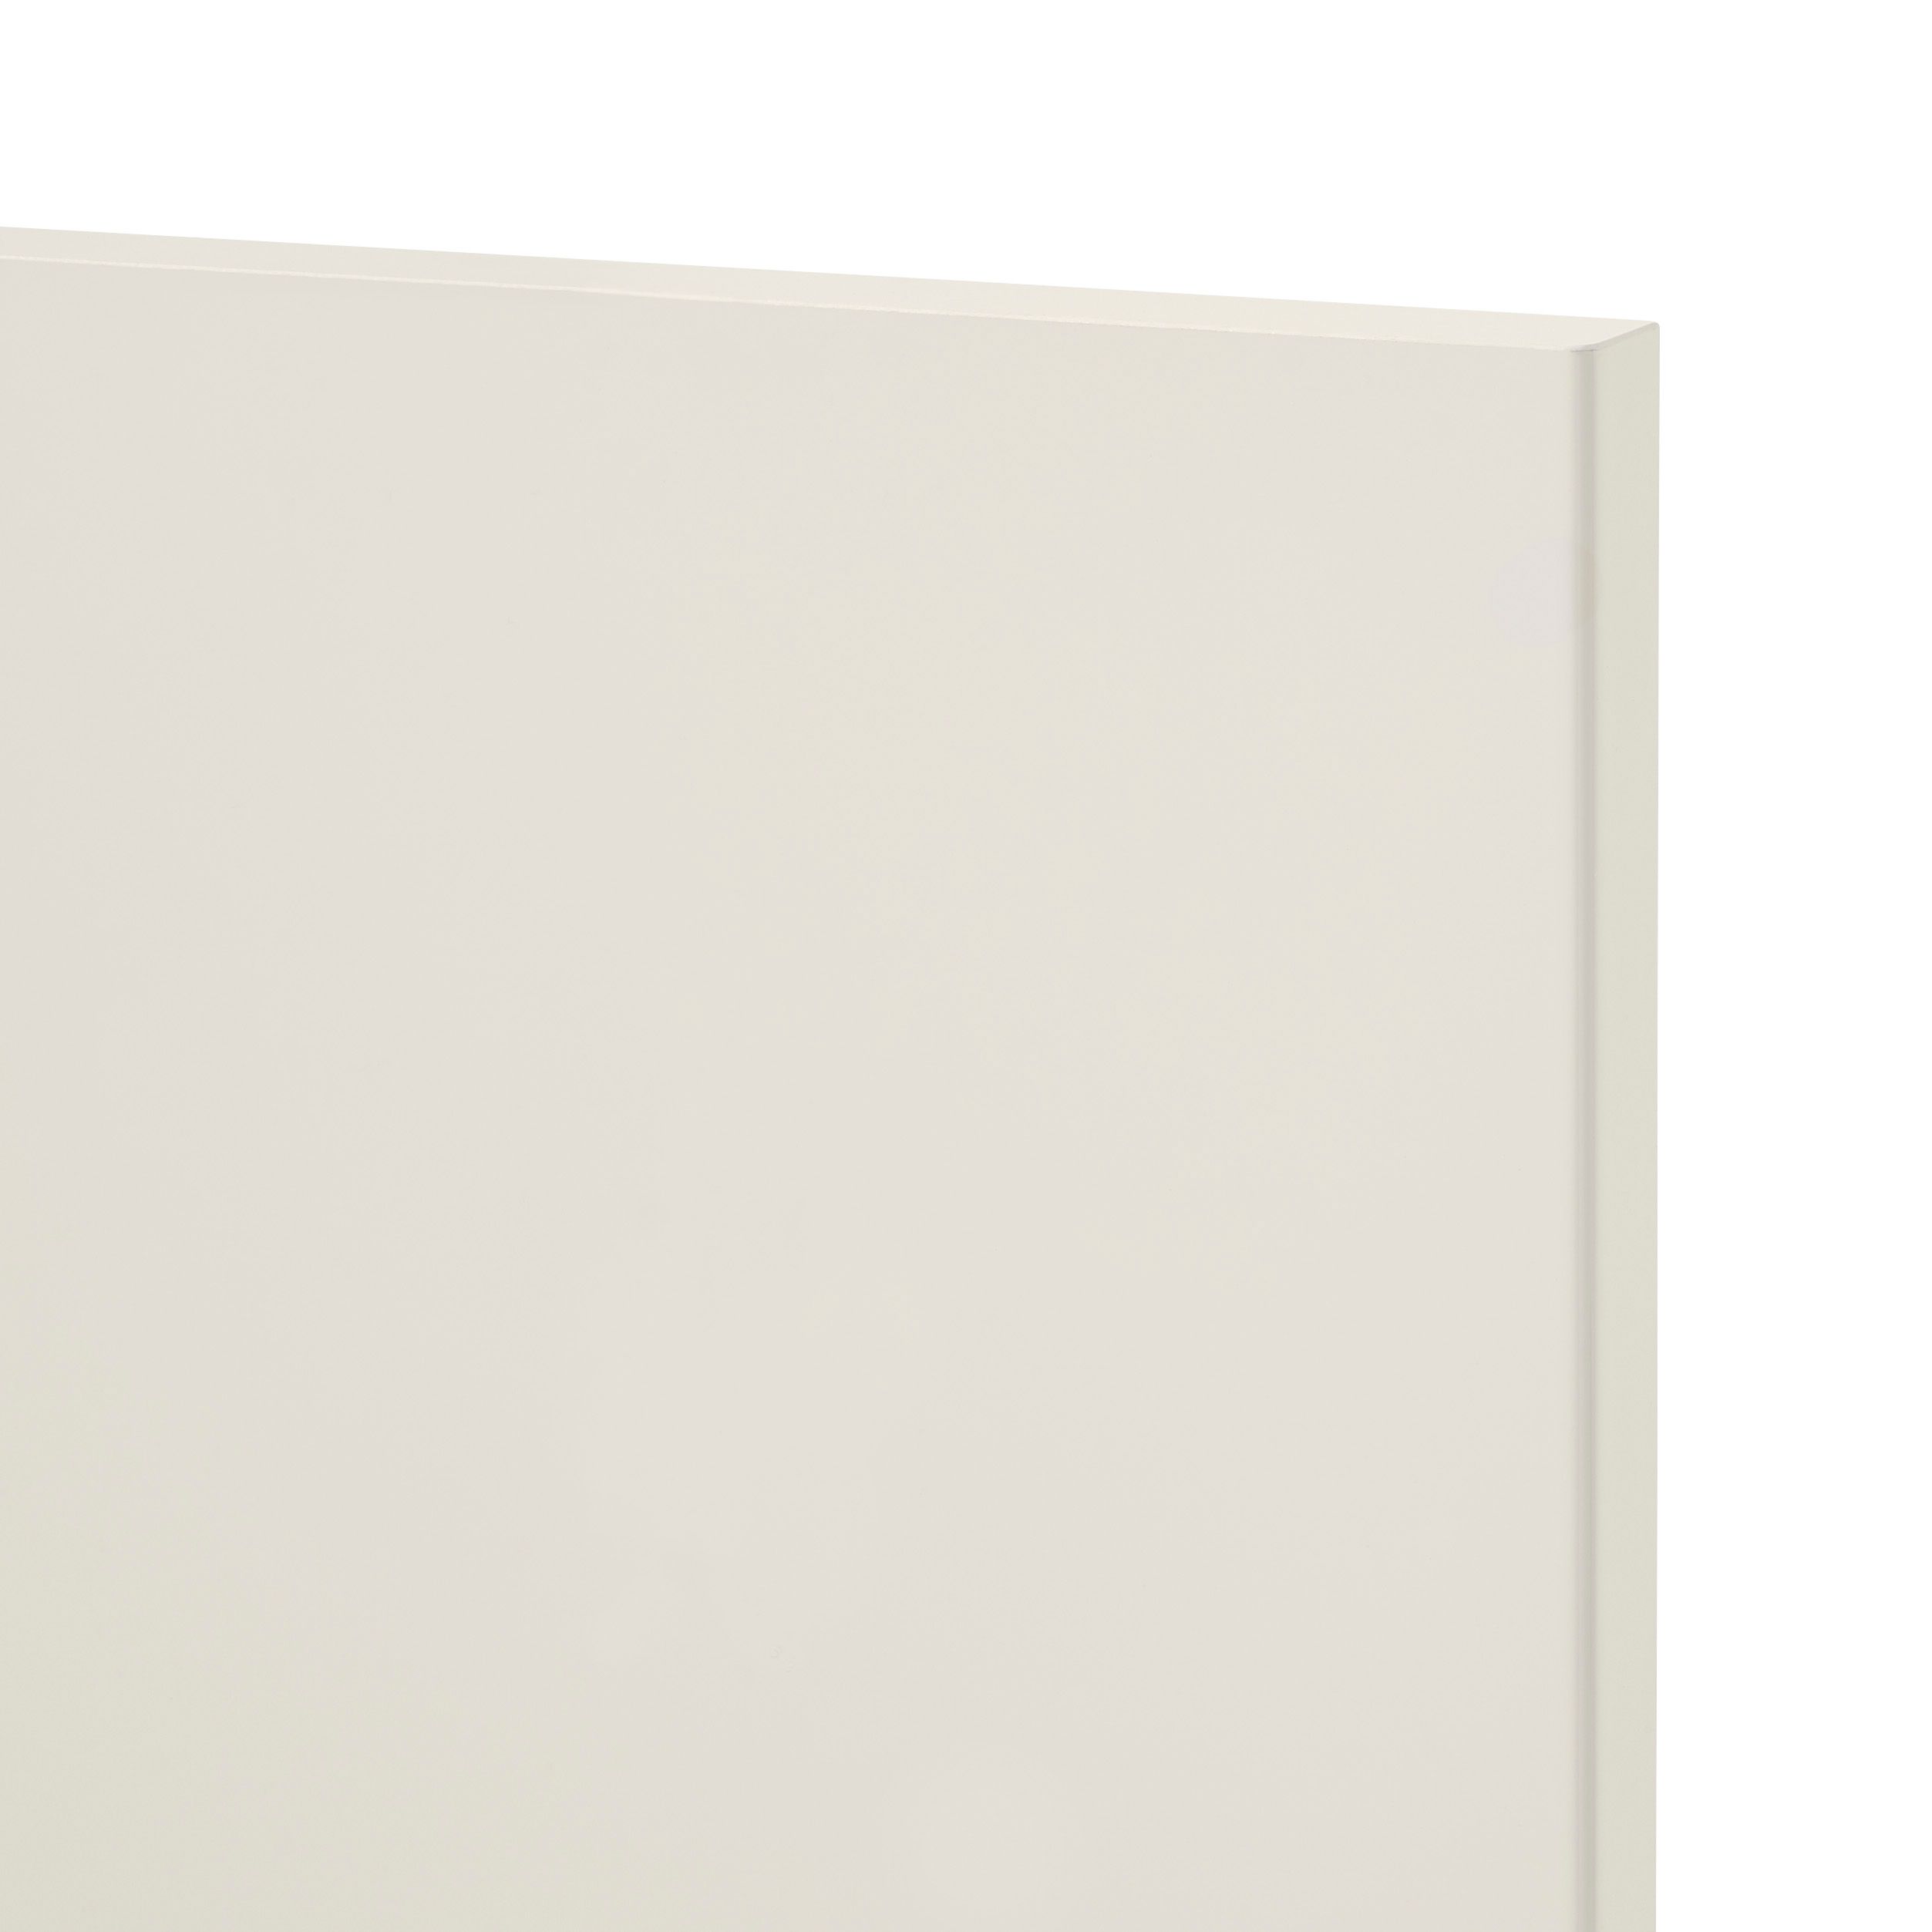 GoodHome Stevia Gloss cream slab Tall appliance Cabinet door (W)600mm (H)806mm (T)18mm